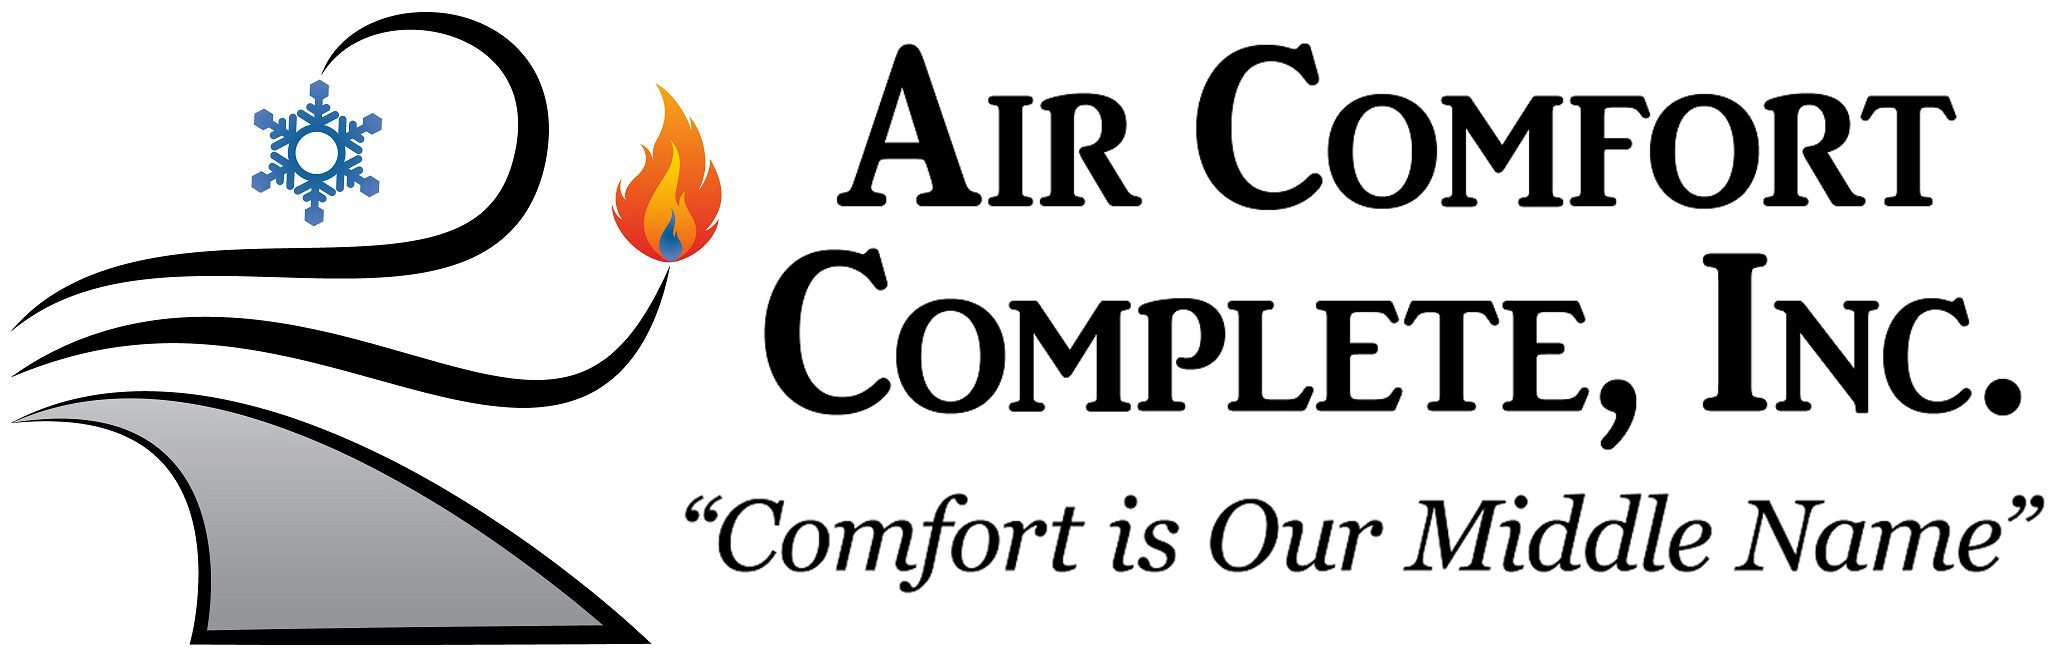 Air Comfort Complete, Inc. Logo